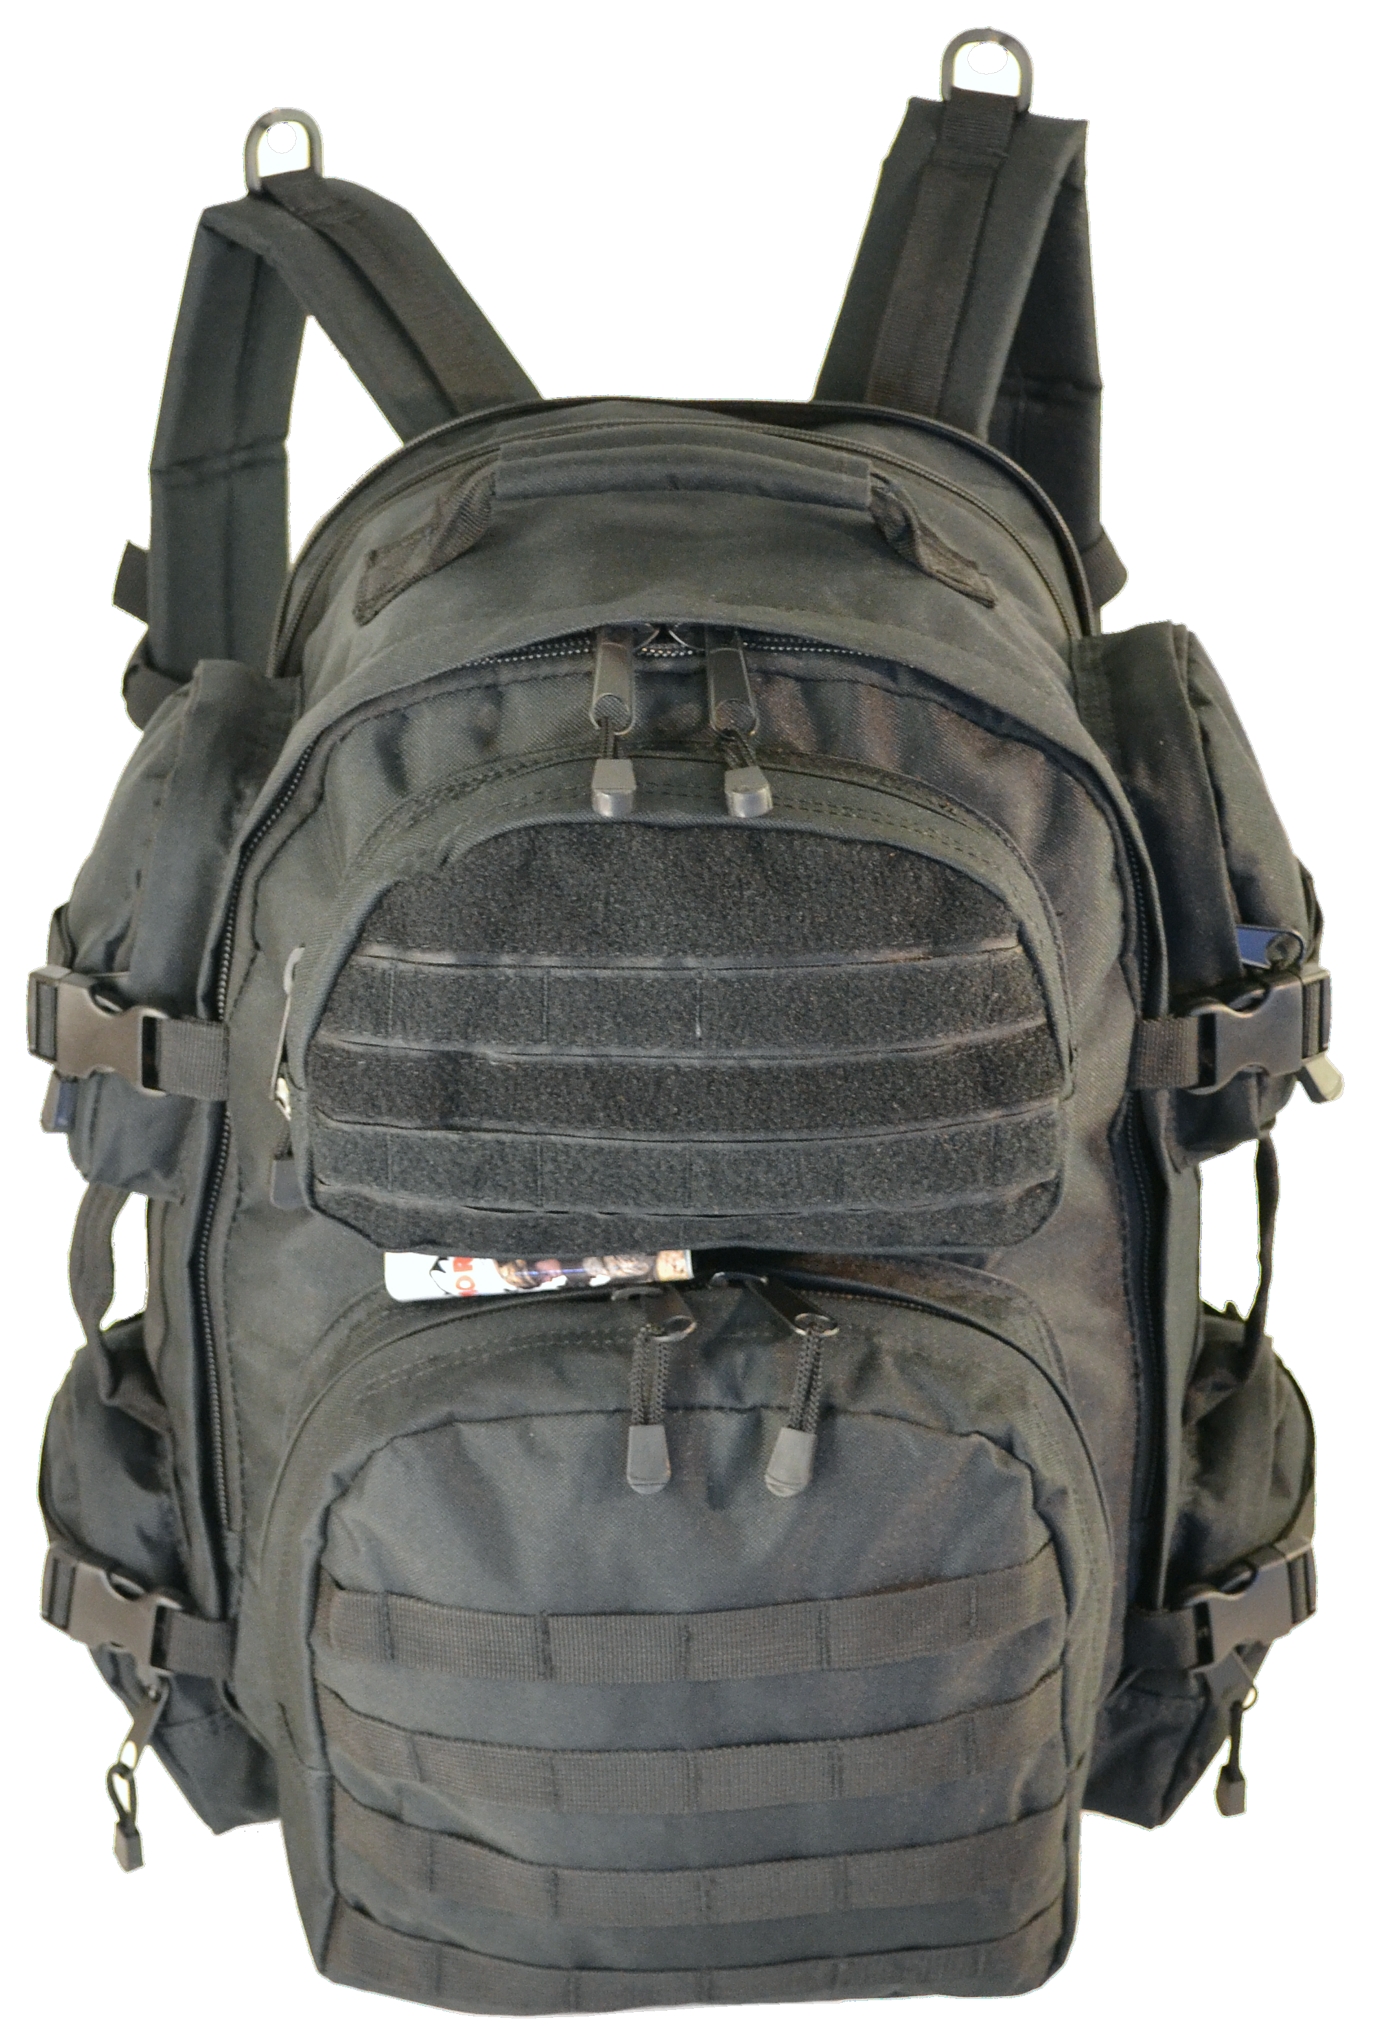 B5 ACU, BK Tan, OD MC Explorer U.S. Military Level 3 Tactical 6 Pockets Backpack, Medium